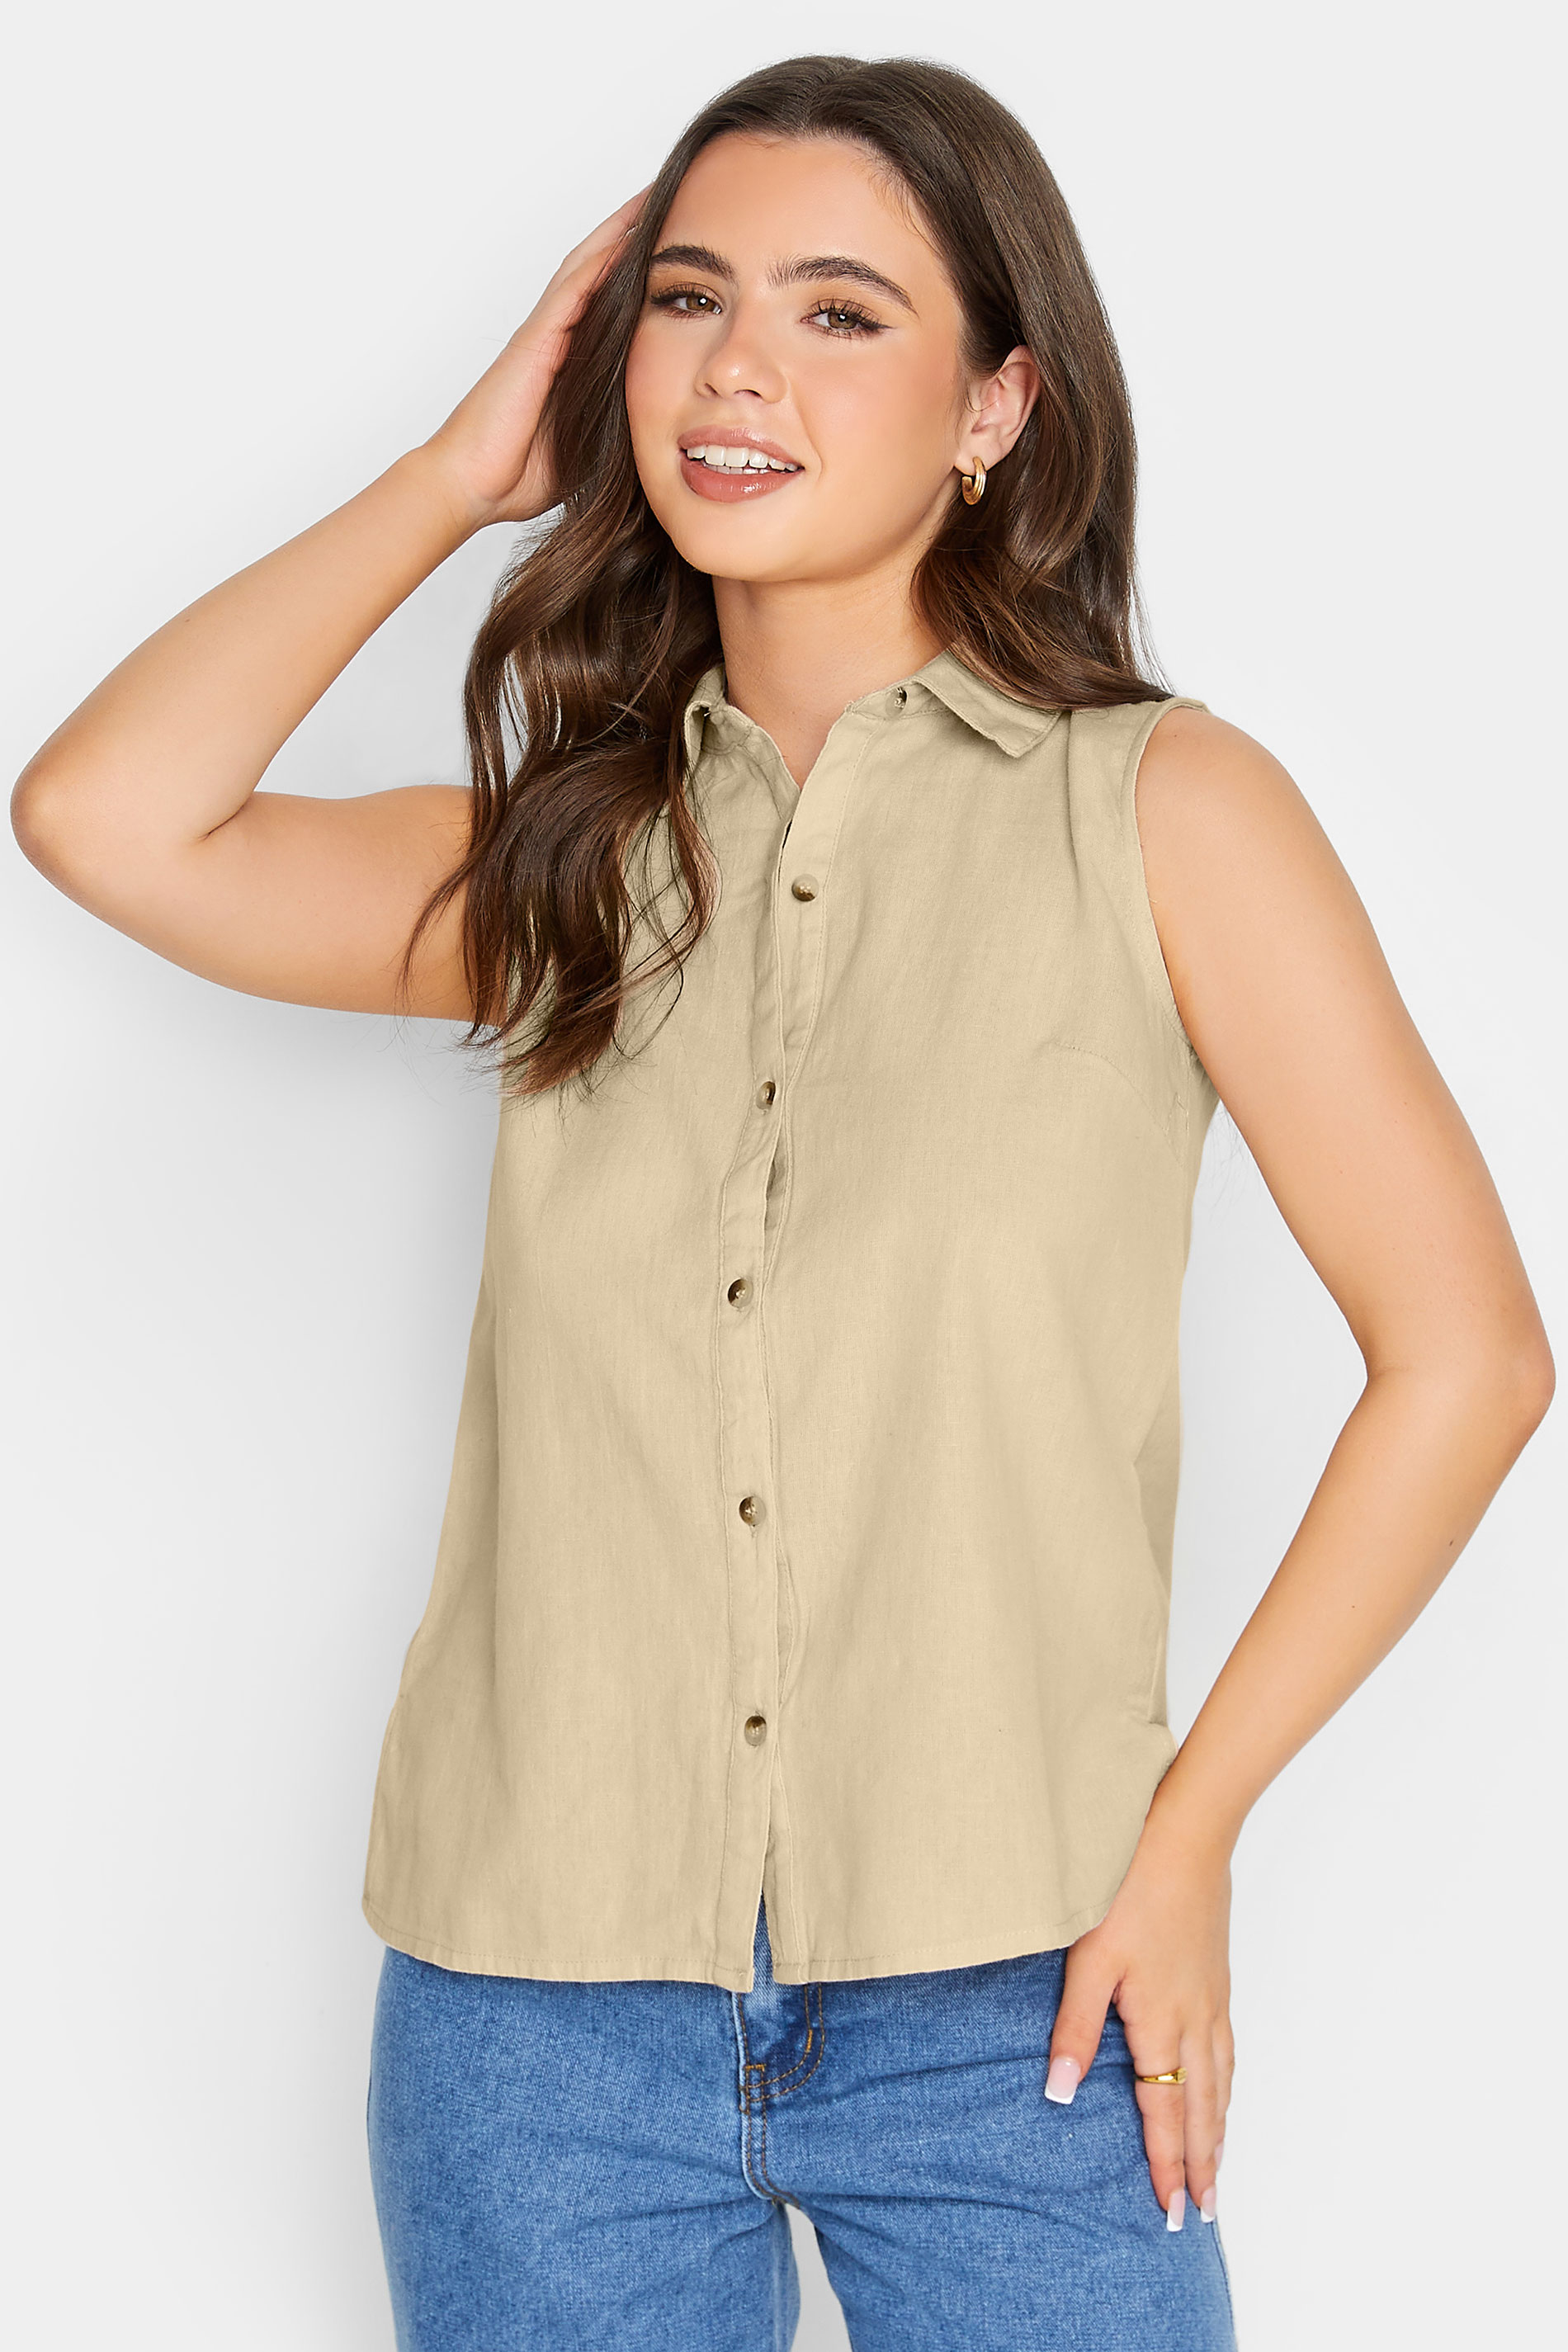 PixieGirl Petite Women's Stone Brown Linen Sleeveless Shirt | PixieGirl 1